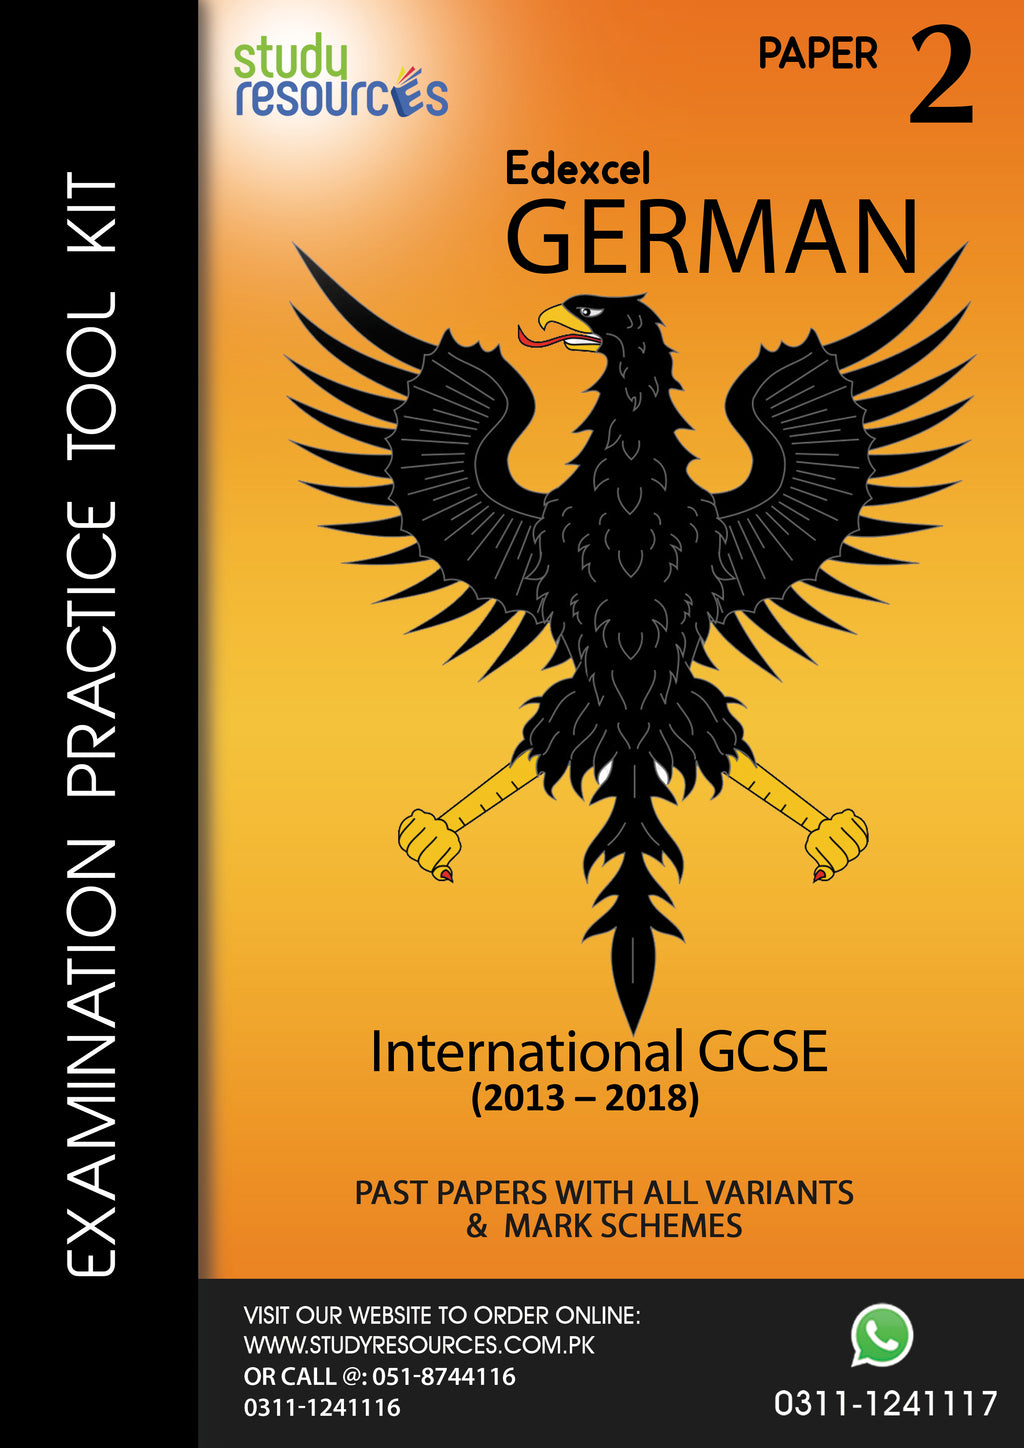 Edexcel IGCSE German P-2 Past Papers (2013-2018)